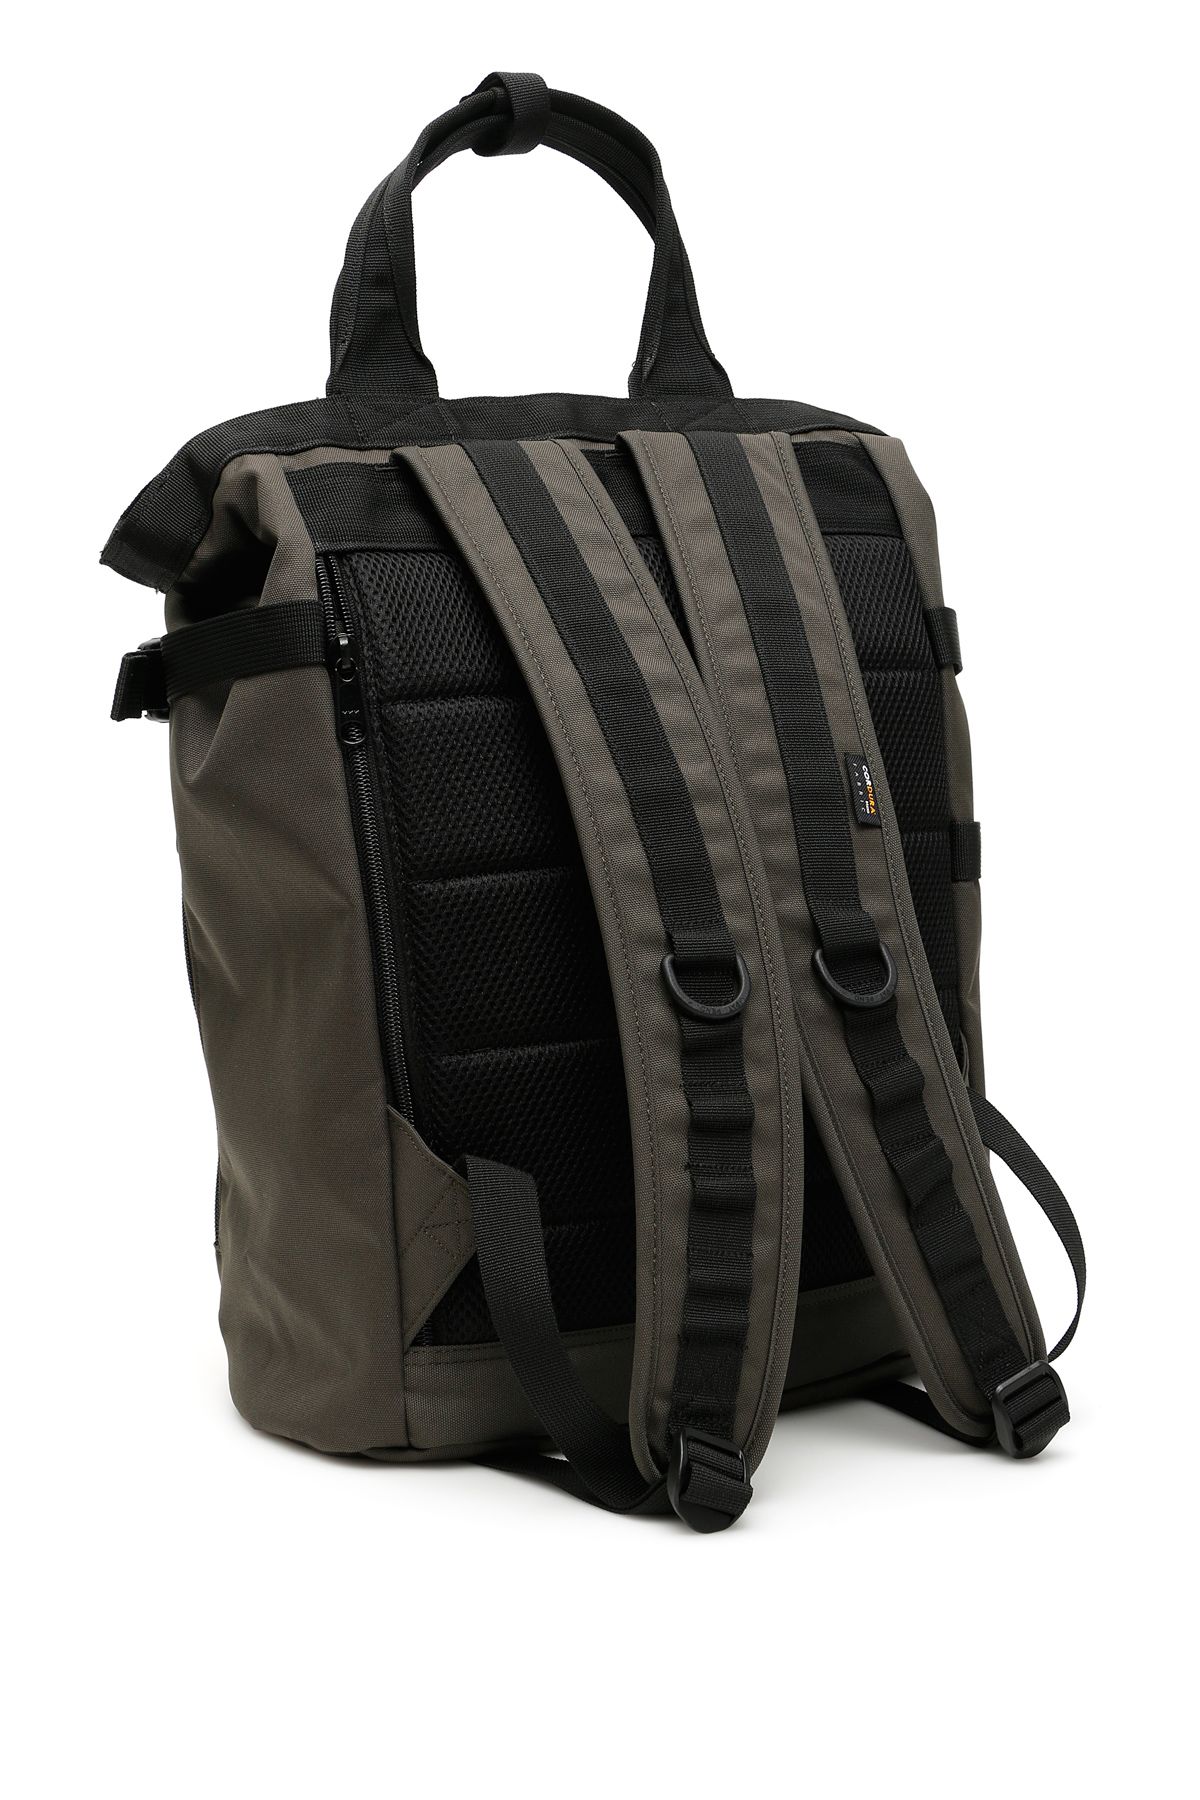 Carhartt Carhartt Payton Carrier Backpack - CYPRESS WHITE|Khaki ...